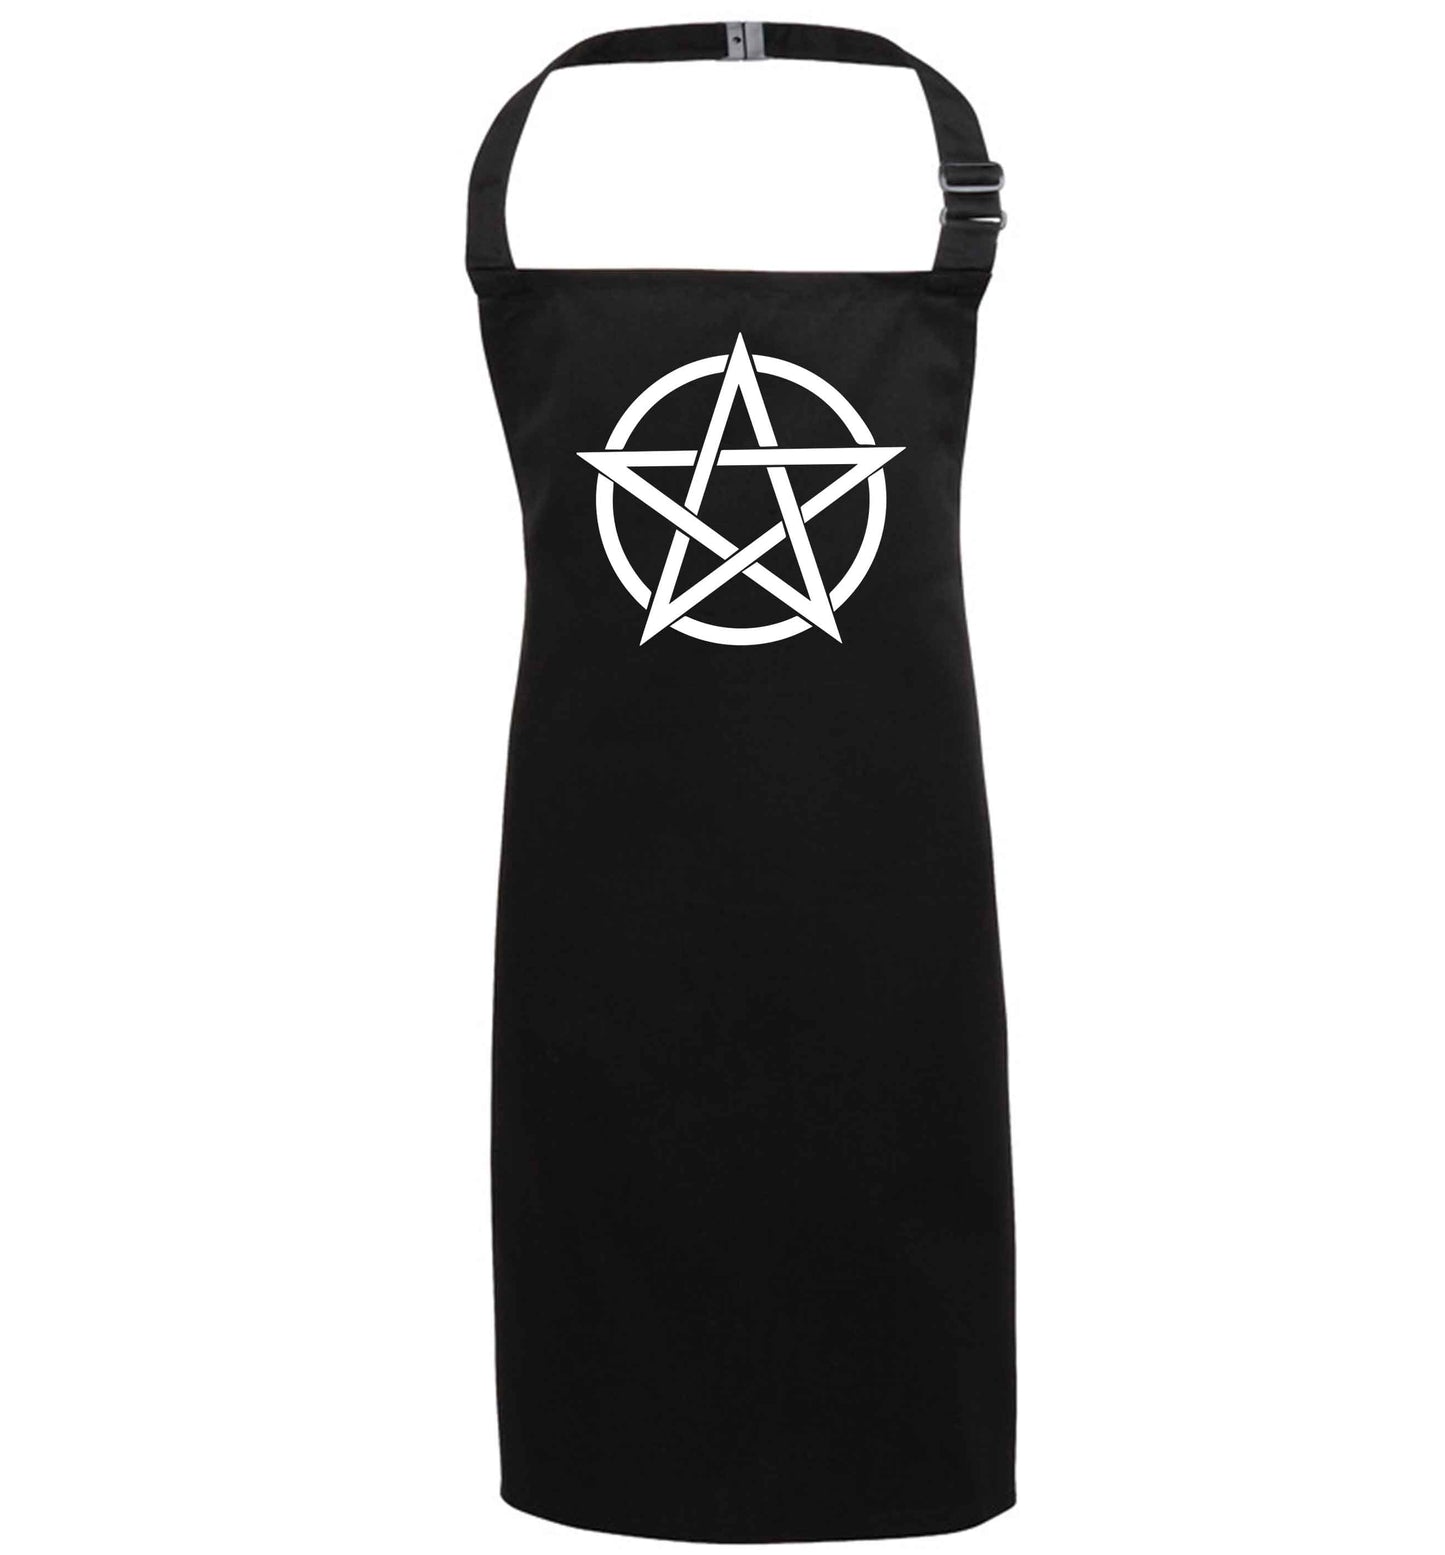 Pentagram symbol black apron 7-10 years